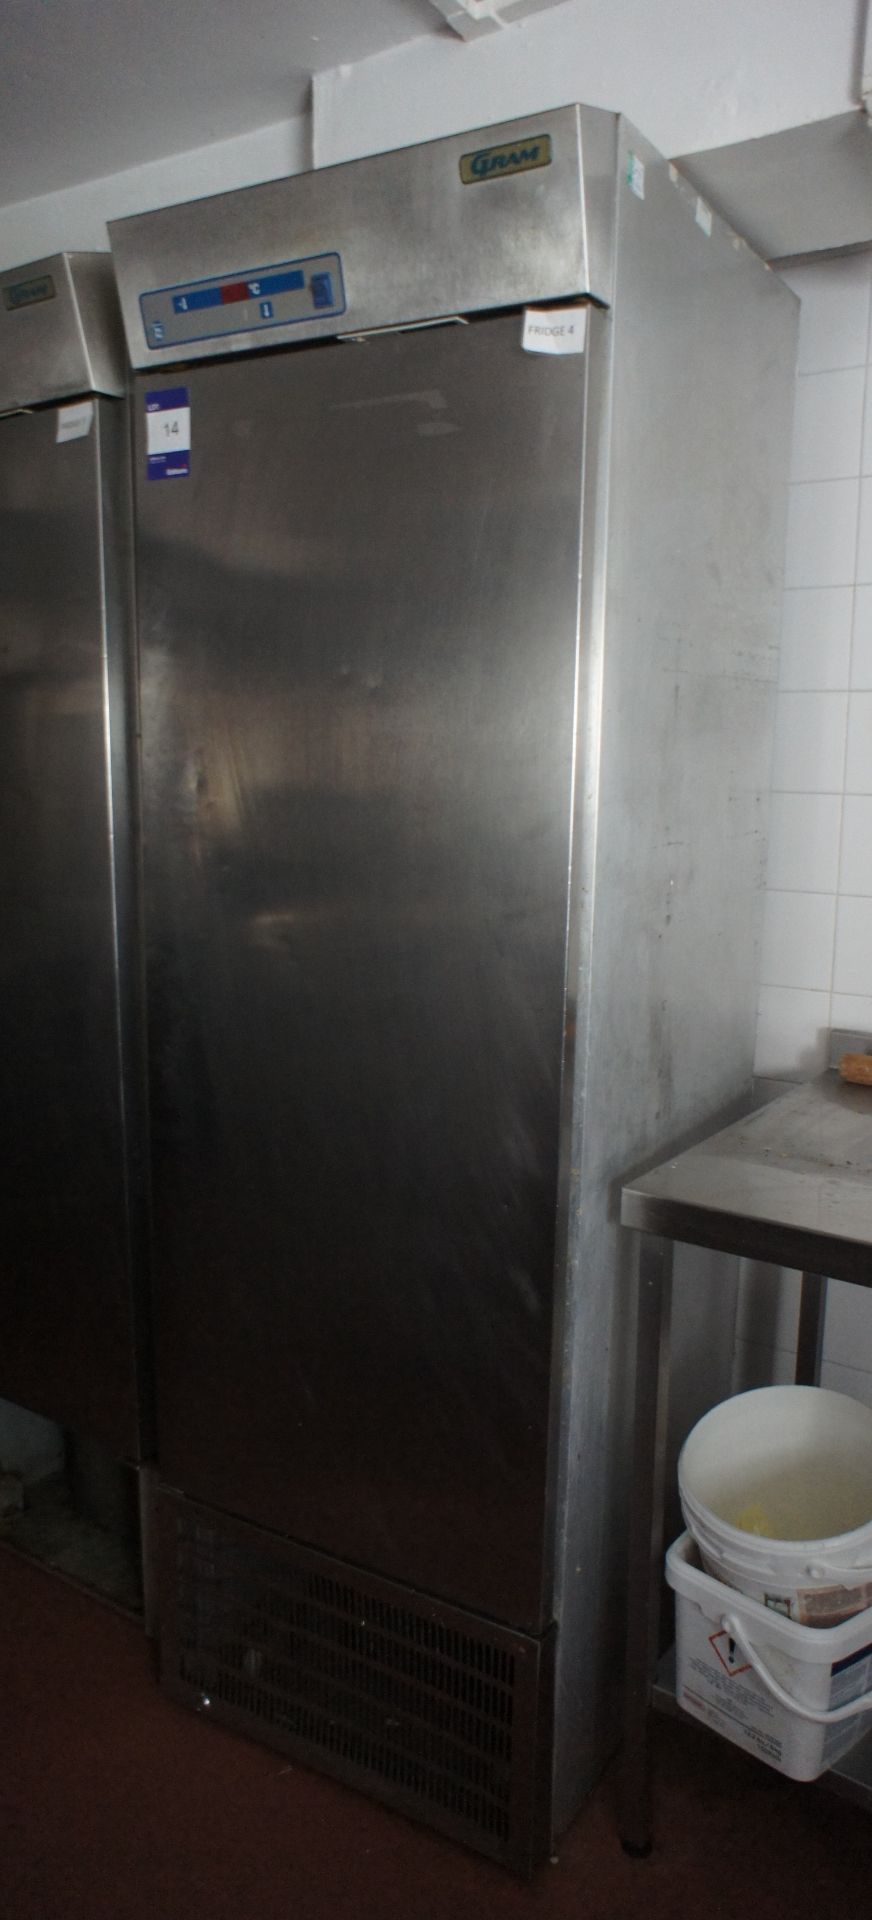 Gram stainless steel single door fridges - Image 3 of 4